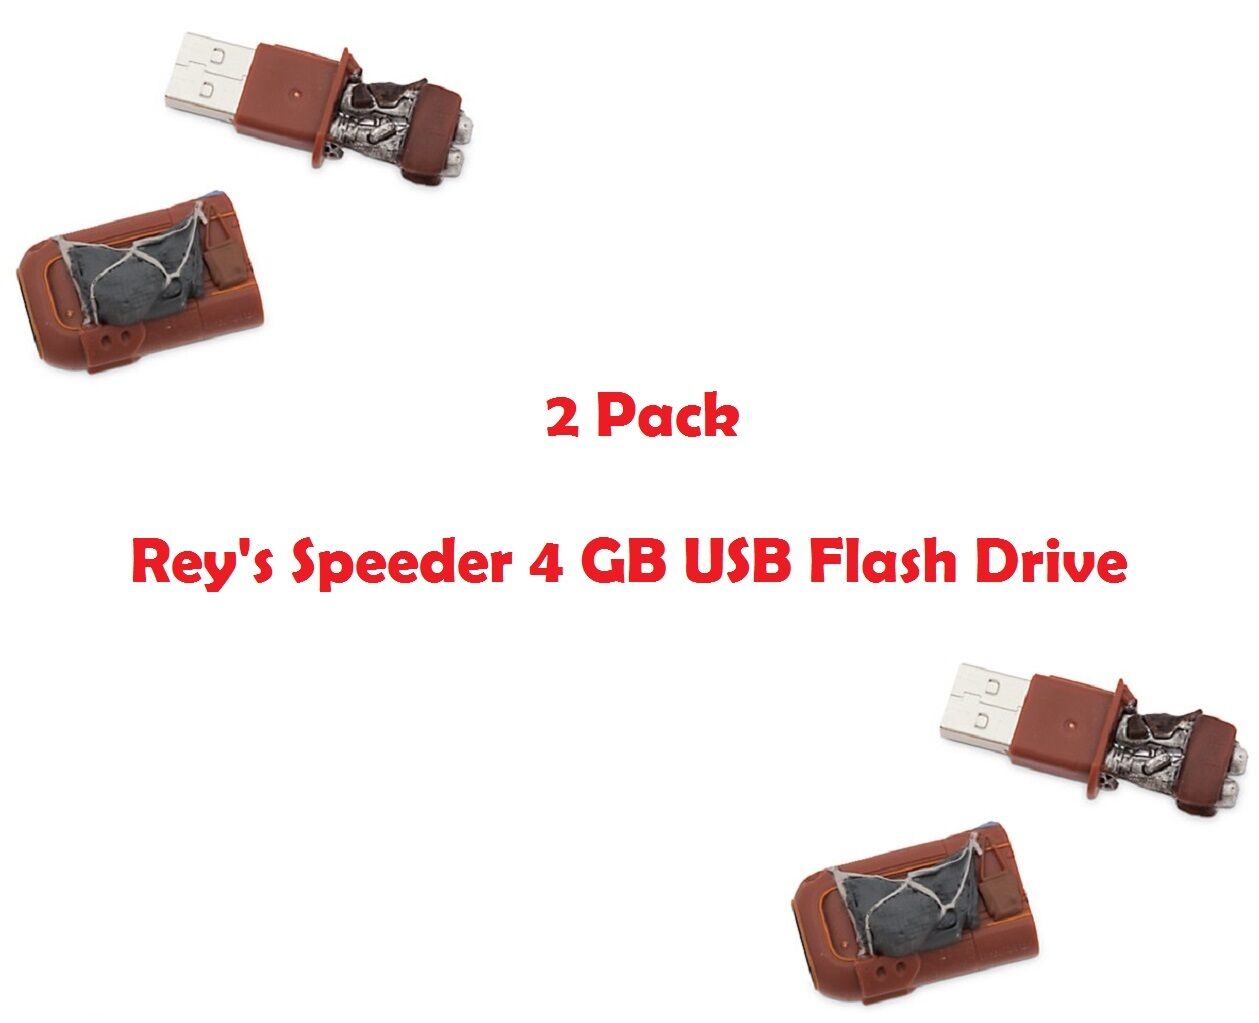 Disney Store Star Wars The Force Awakens *2 Pack* Reys Speeder 4GB USB Flash